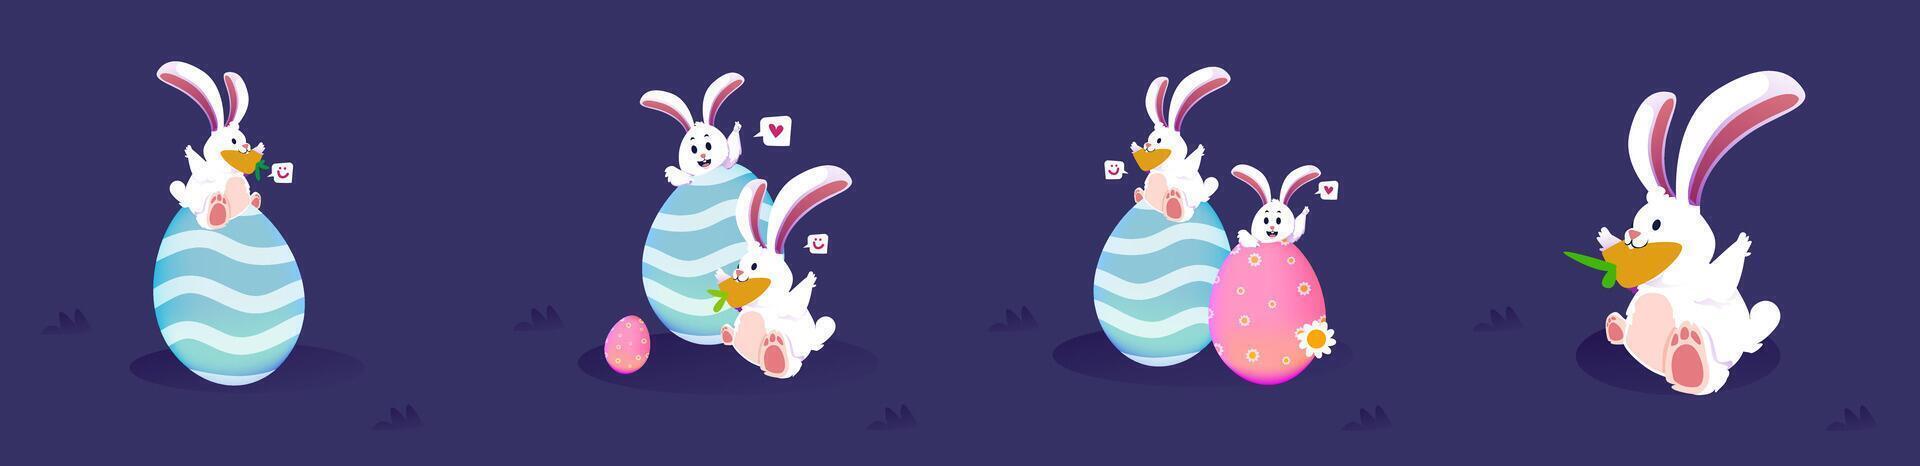 bunny illustration set for easter day vector